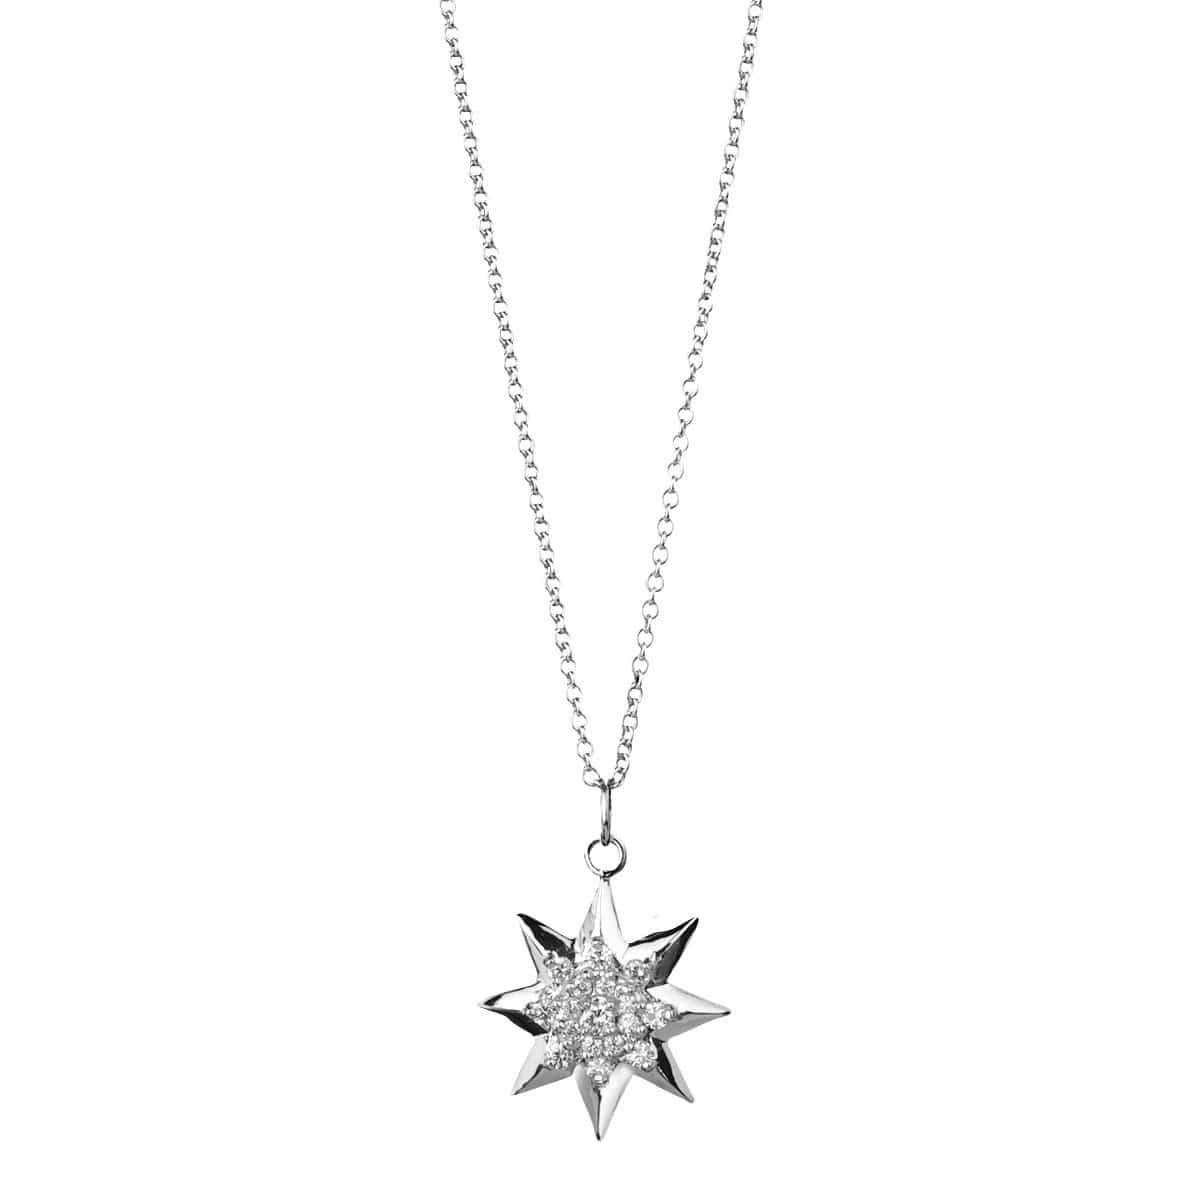 Japanese Platinum Necklace Chain for Women JL PT CH 1164